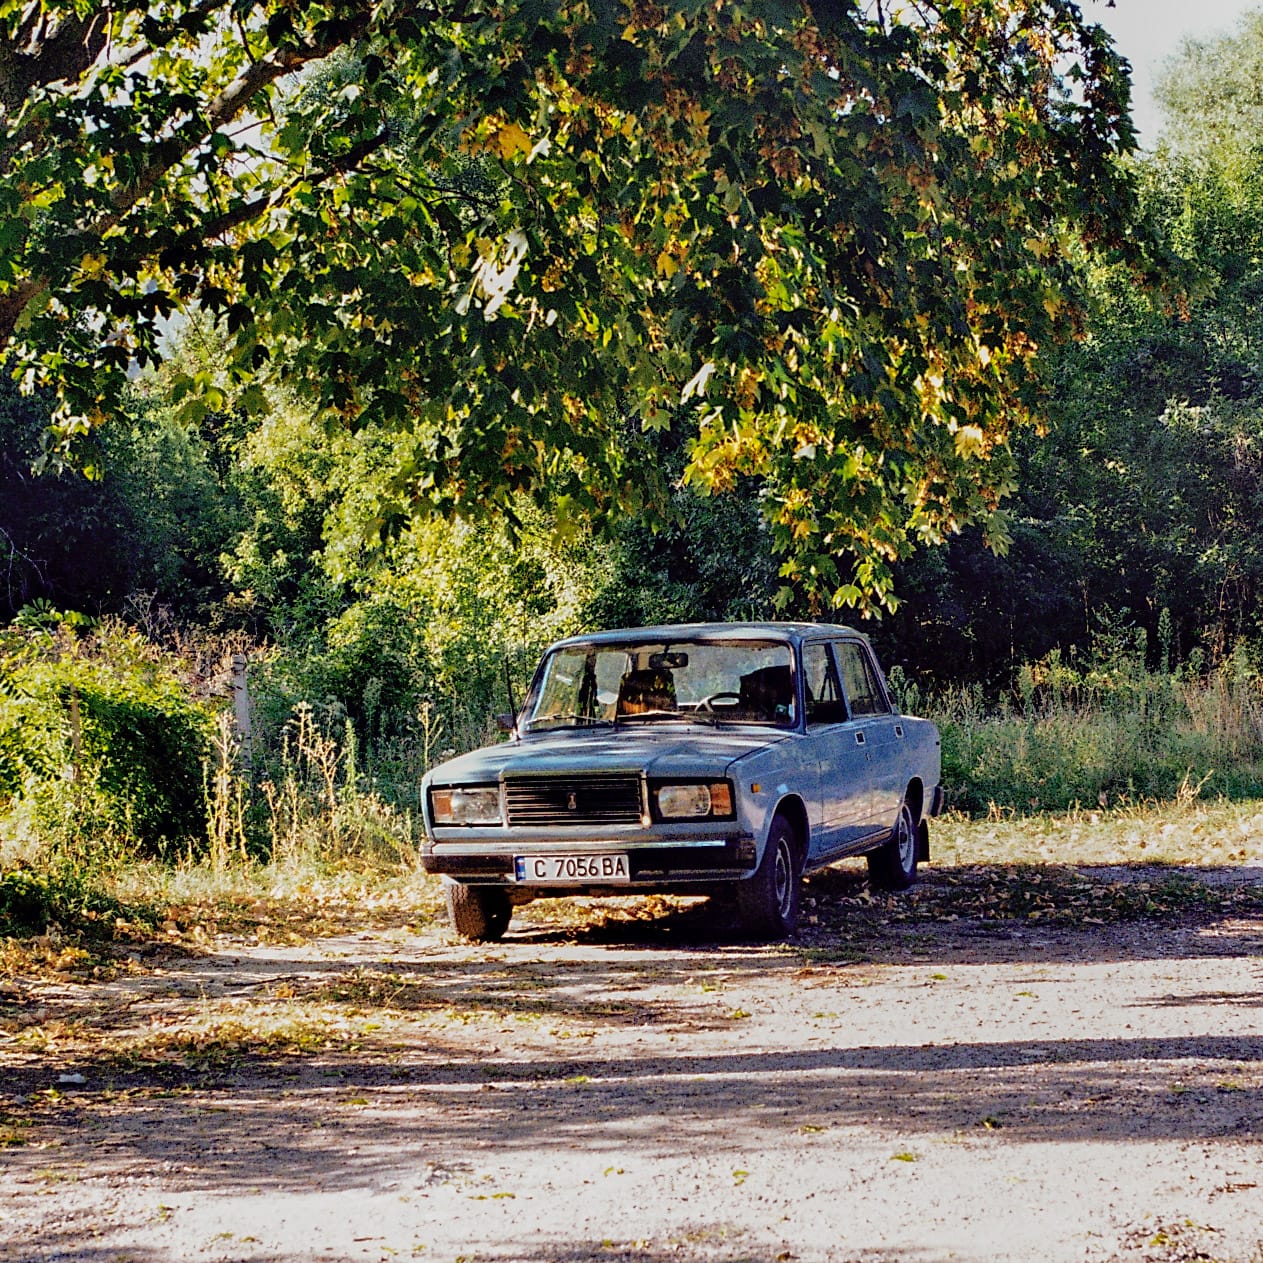 A photo of a trusty, soviet Lada car